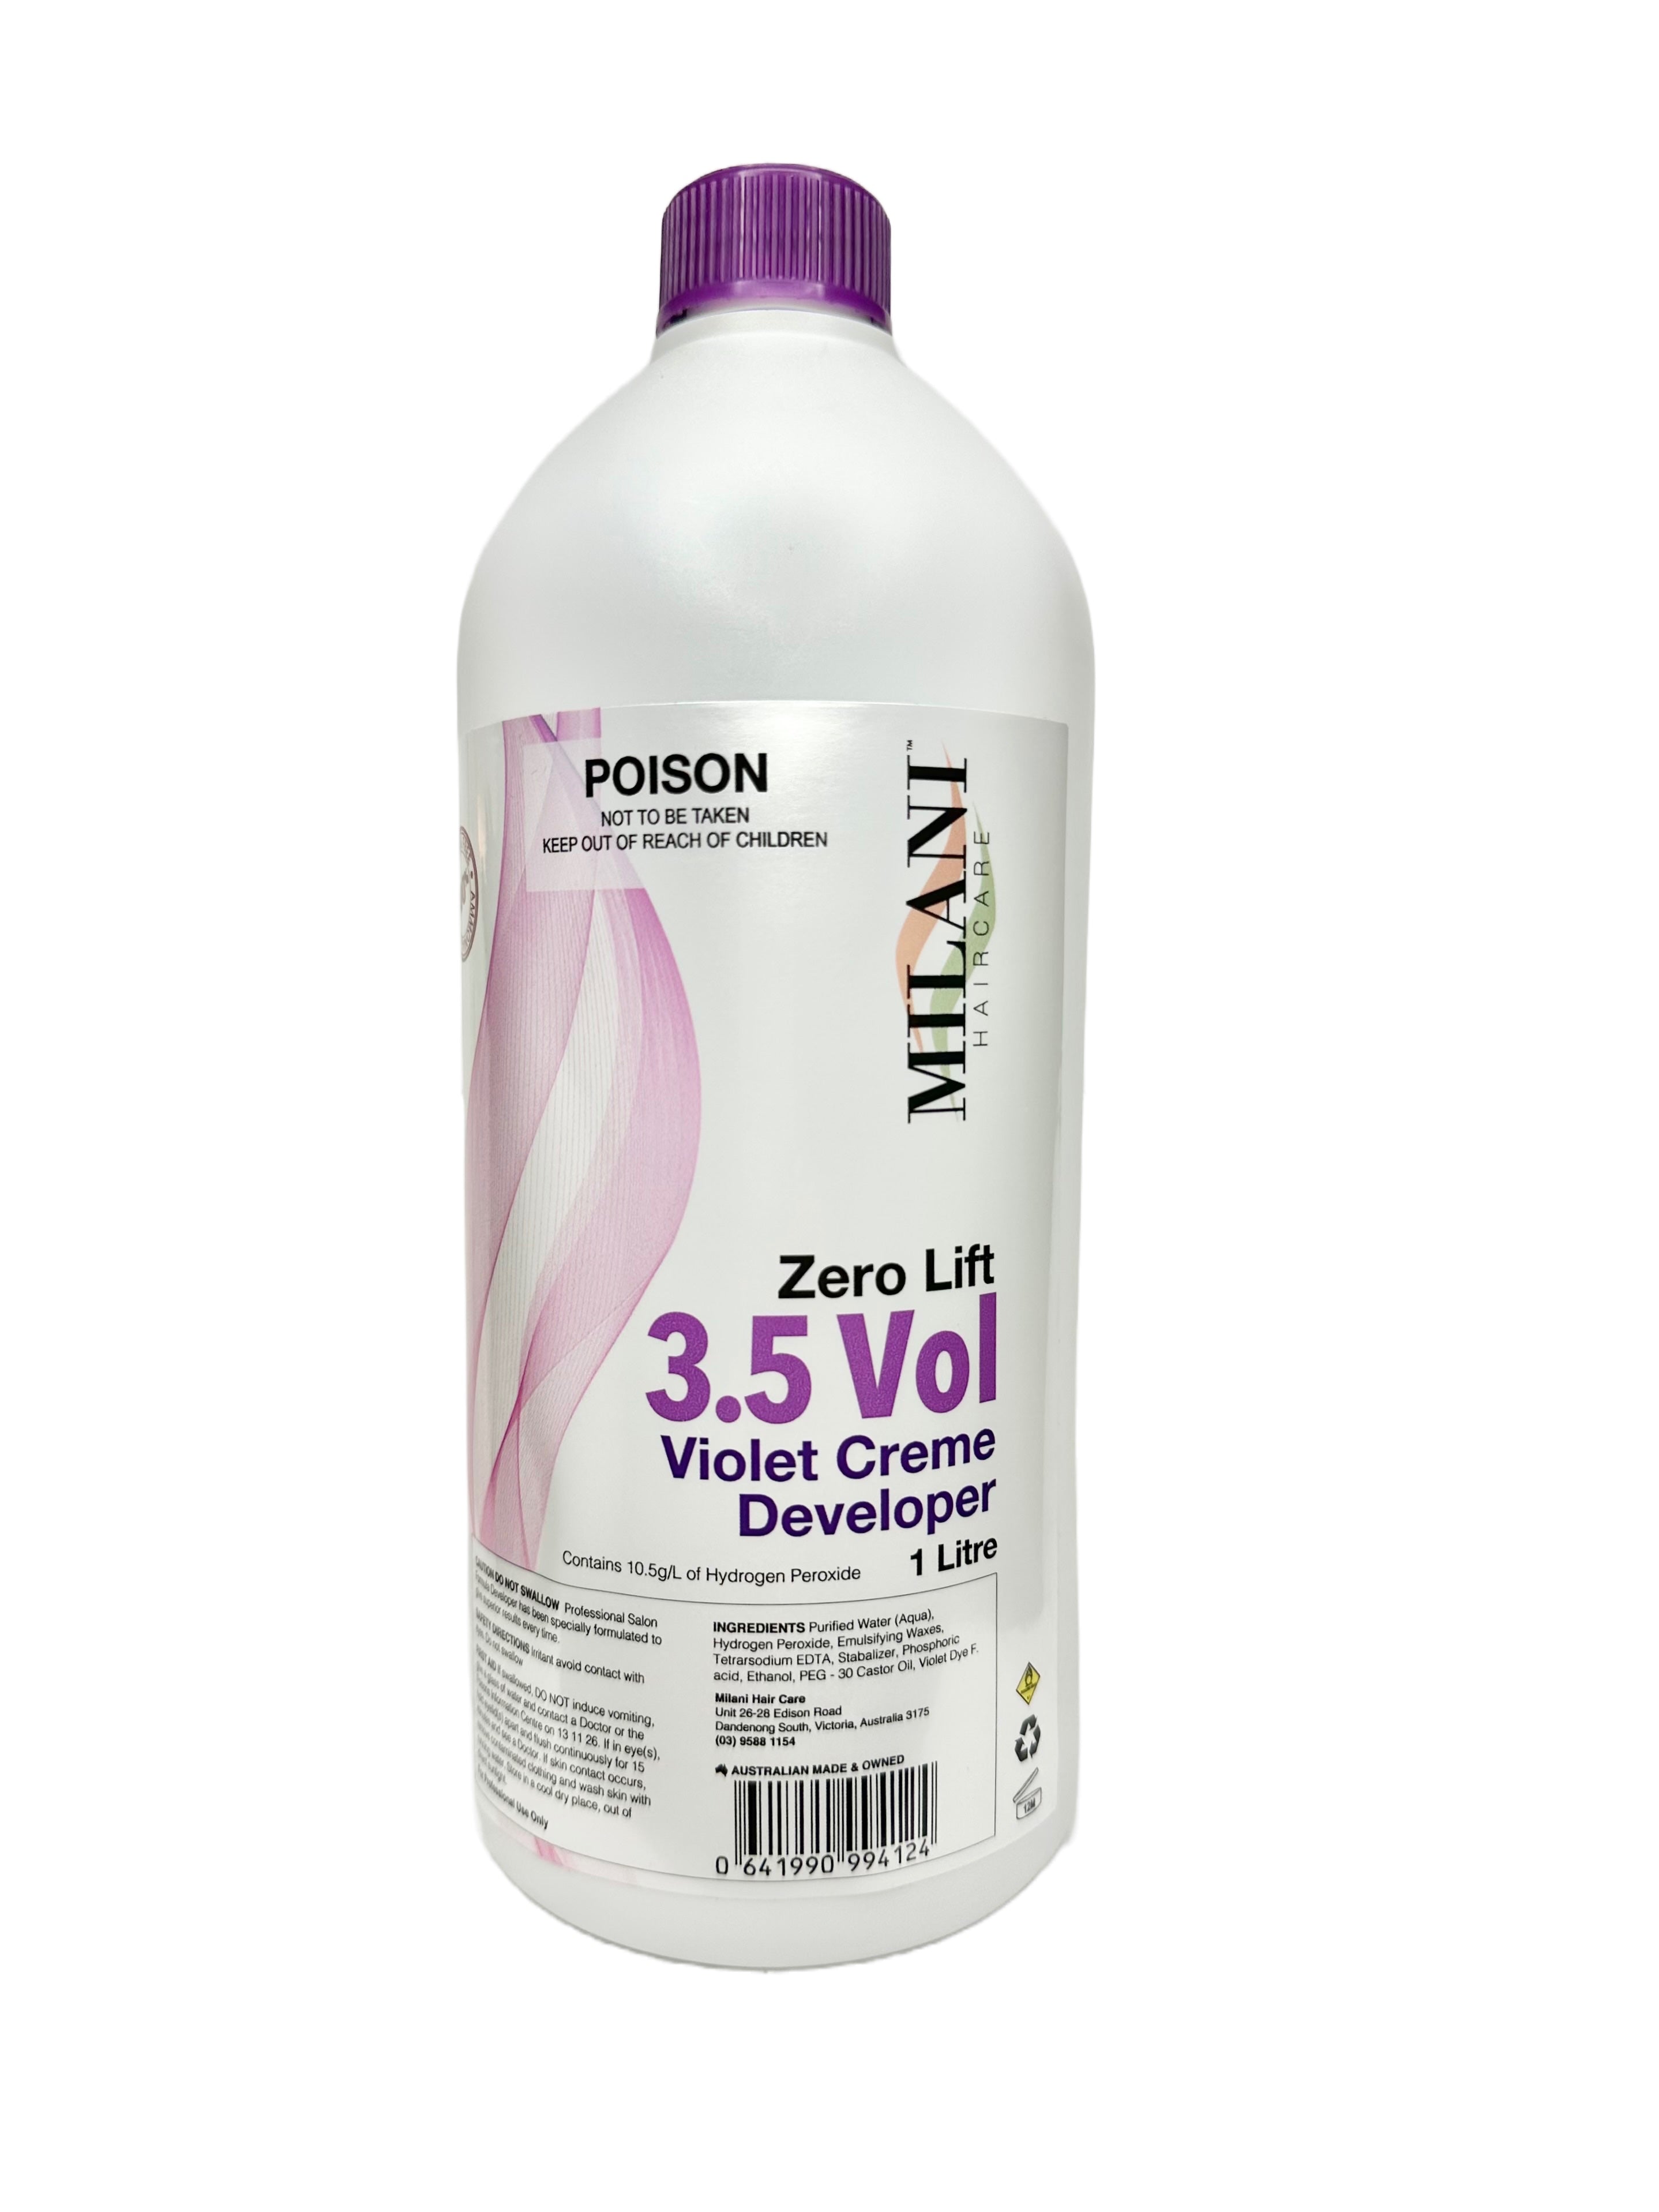 Milani Haircare Violet Creme Developer ZERO Lift 3.5 Vol 1.05% 1 Litre